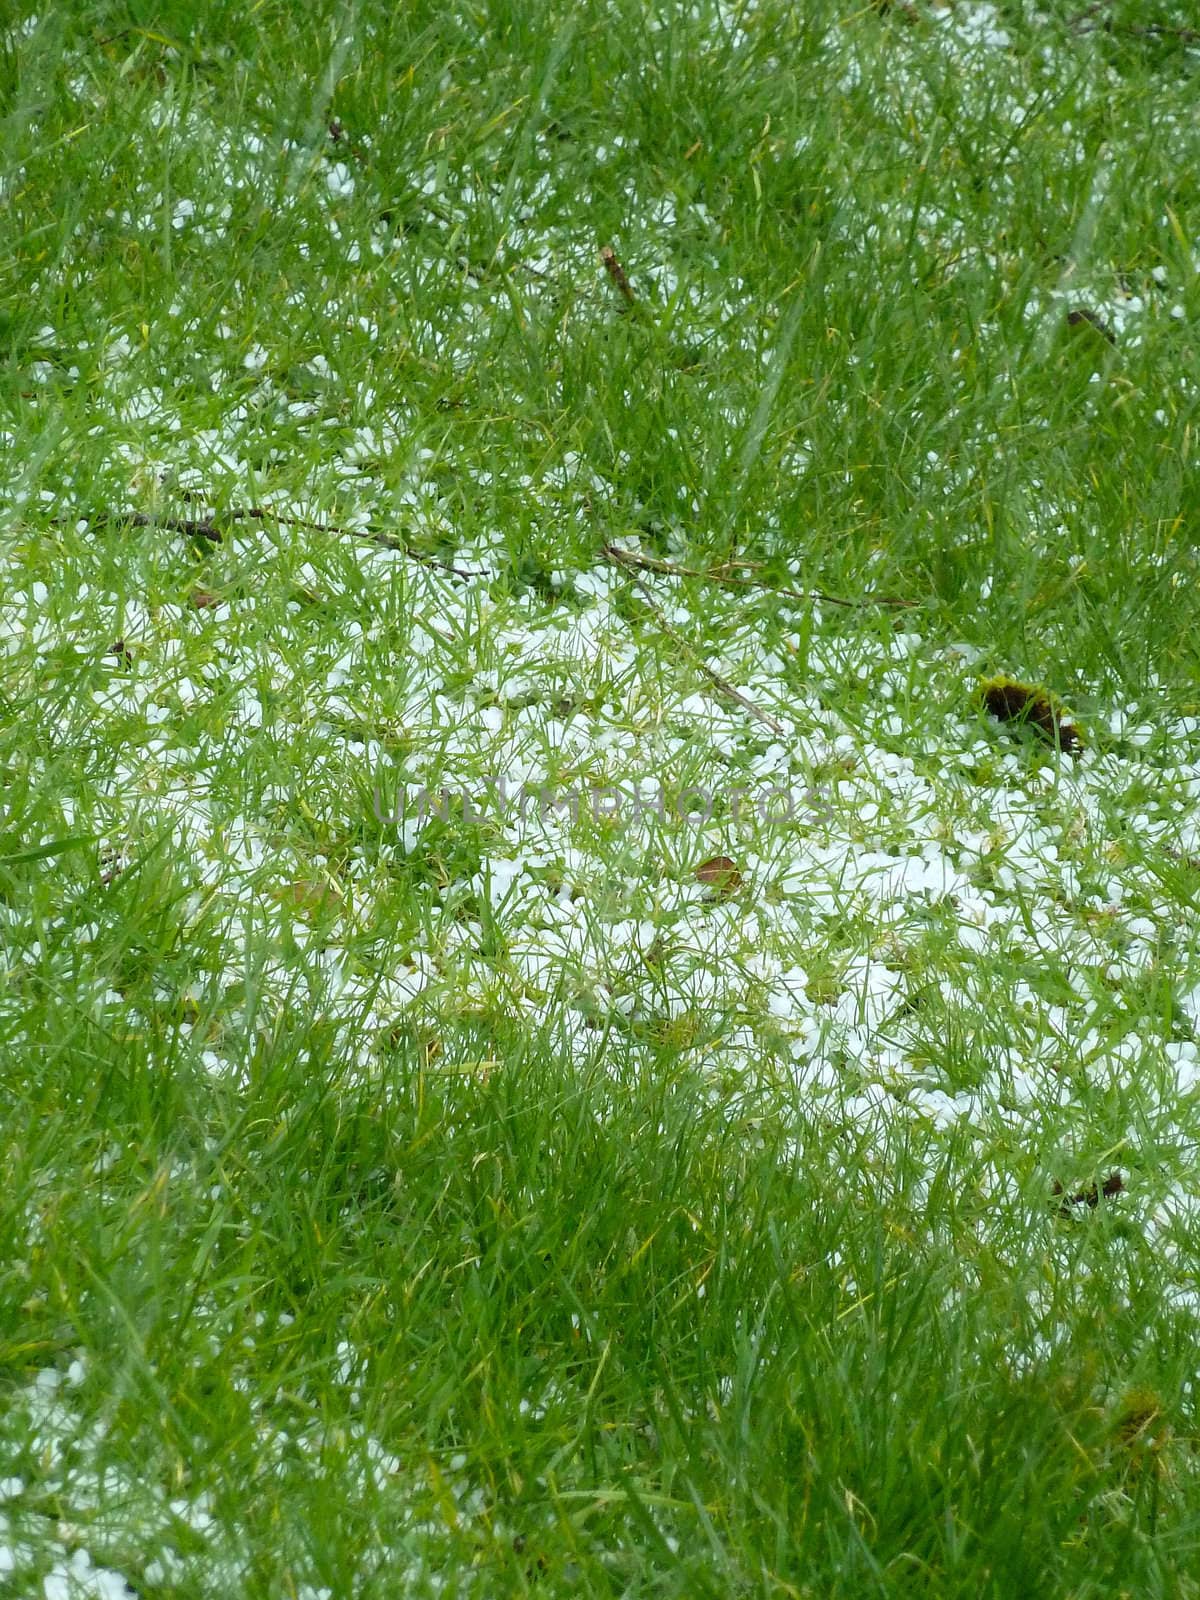 hailstones on grass by gazmoi